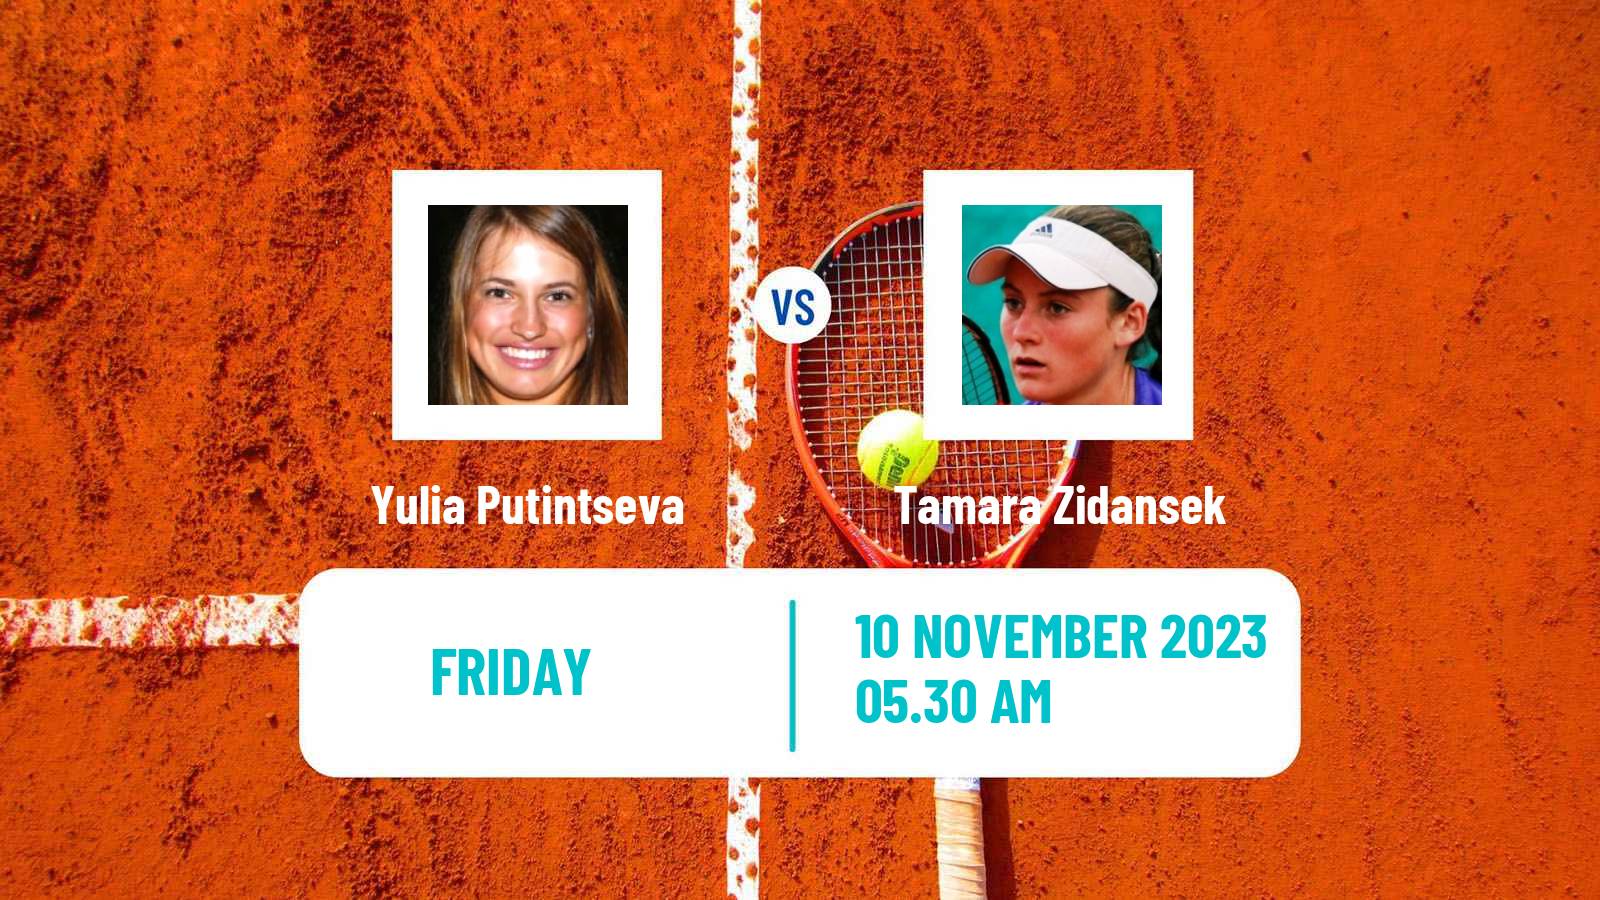 Tennis WTA Billie Jean King Cup World Group Yulia Putintseva - Tamara Zidansek